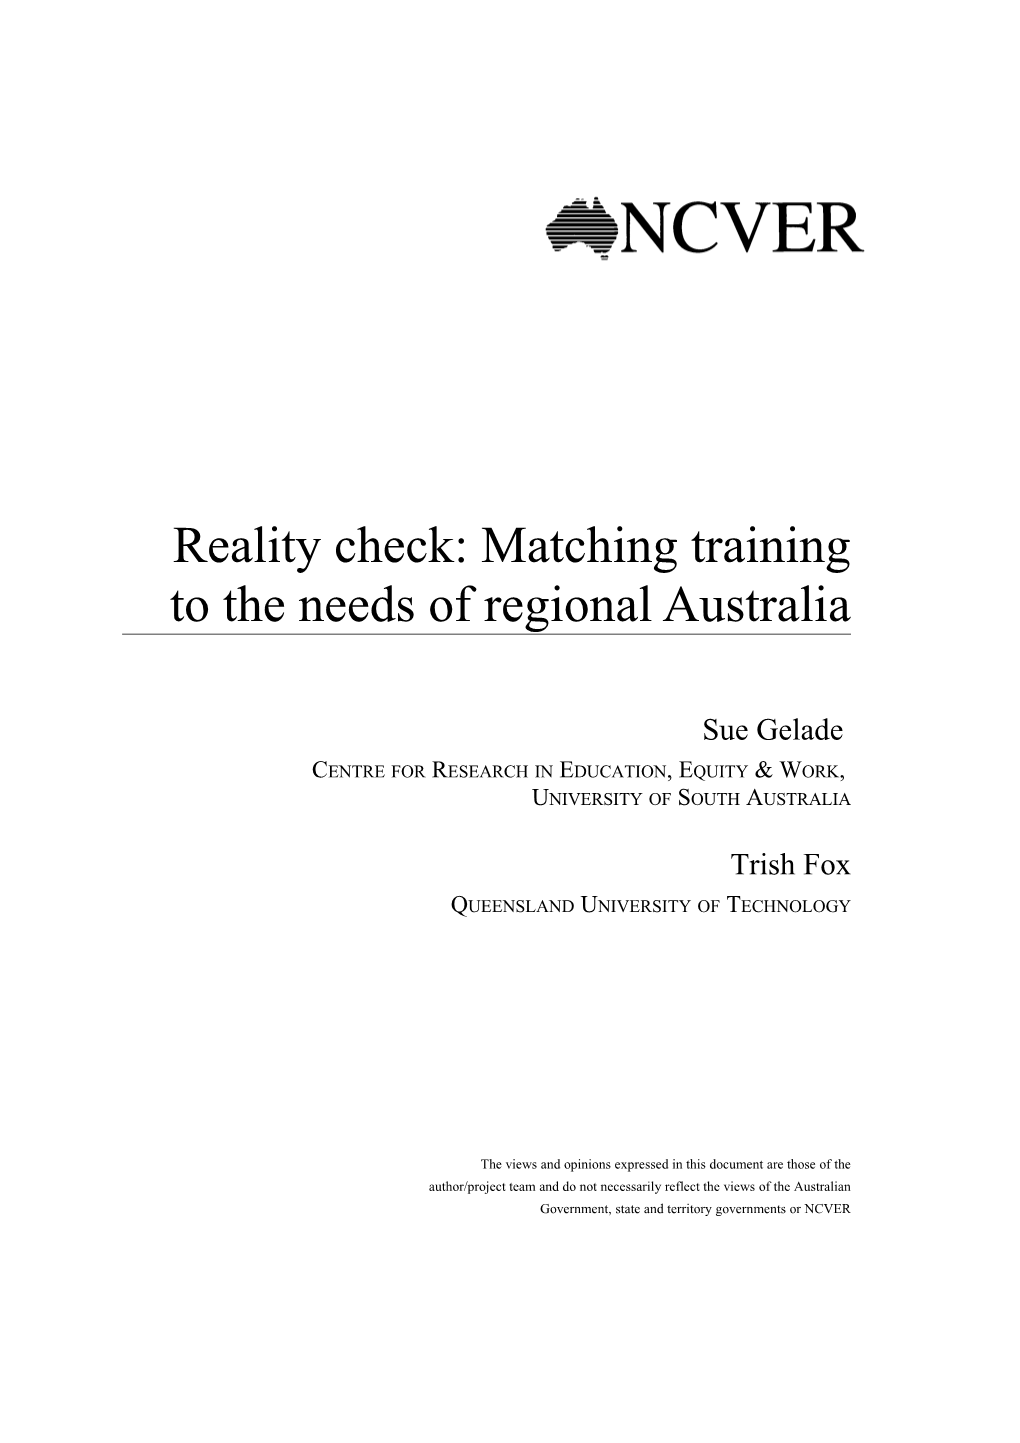 Reality Check: Matching Training to the Needs of Regional Australia